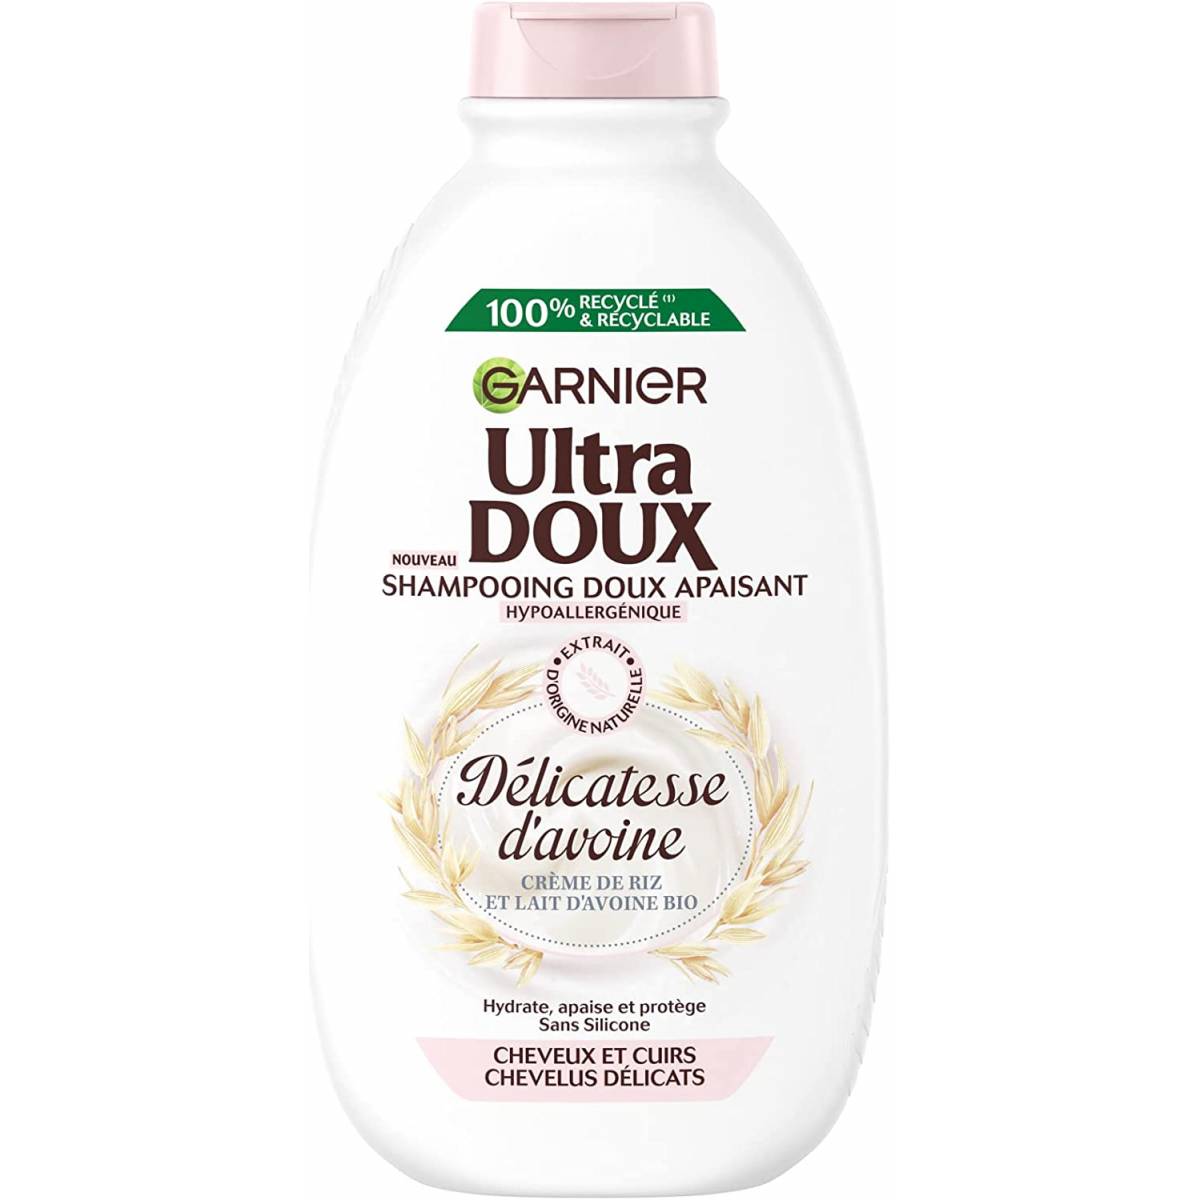 Ultra Doux Oat Delicacy Mildes, beruhigendes Hafer-Delicacy-Shampoo 400 ml